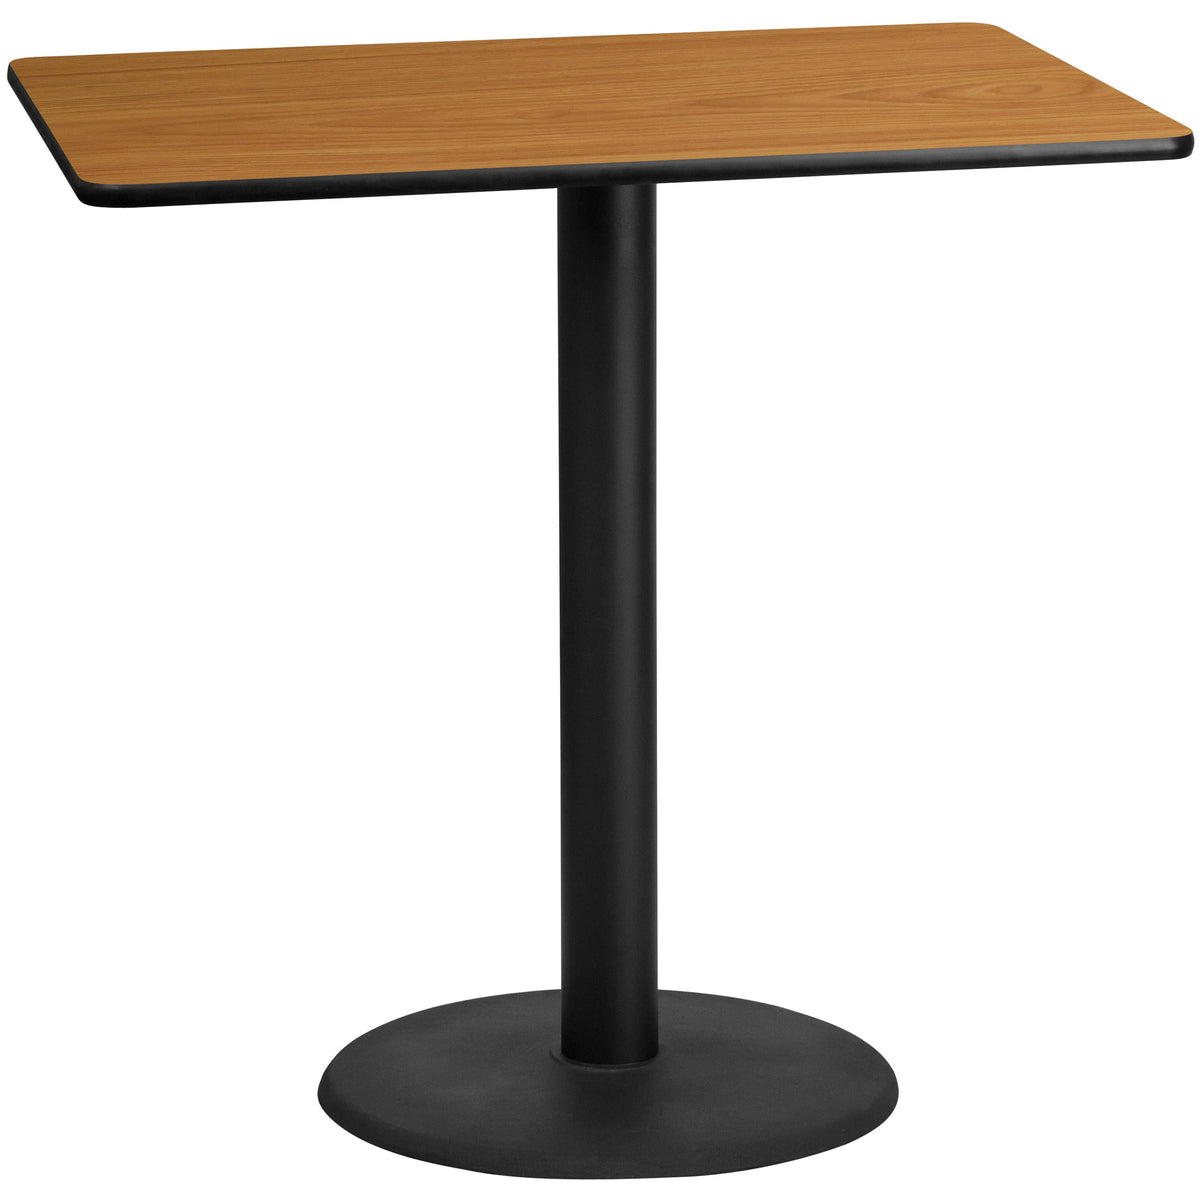 Mahogany |#| 30inch x 48inch Mahogany Laminate Table Top with 24inch Round Bar Height Table Base